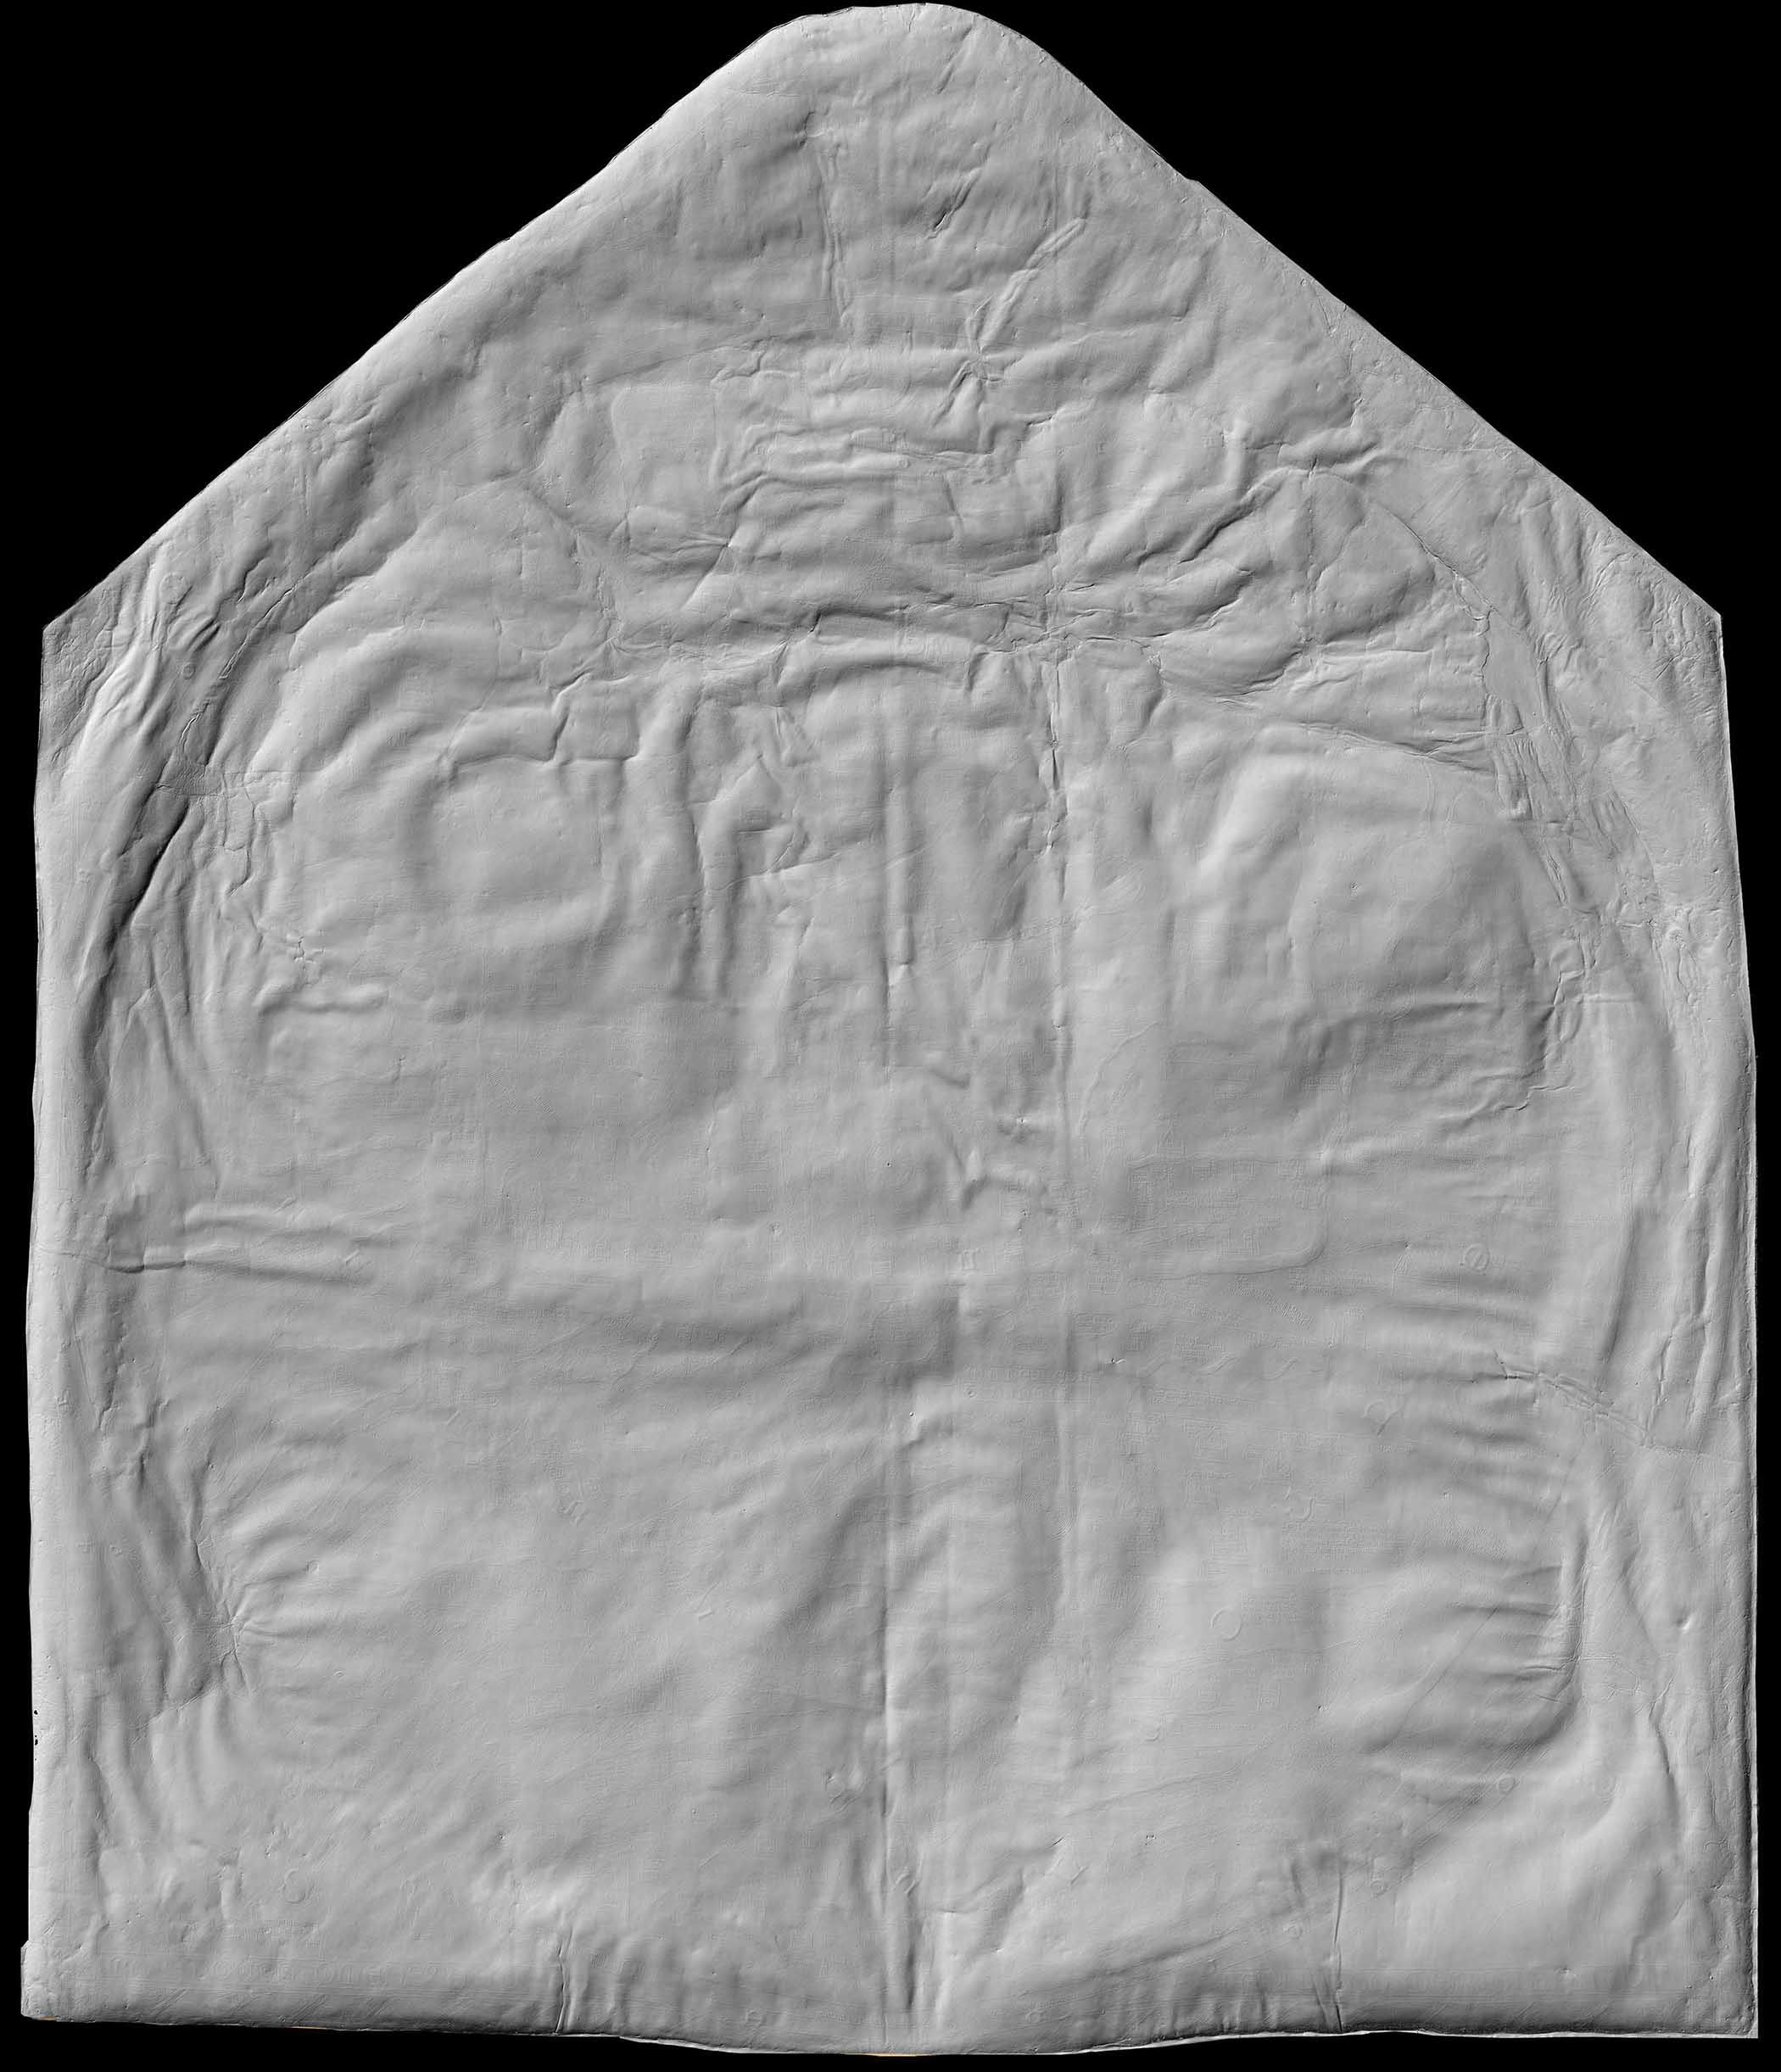 3D Scan Mappa Mundi